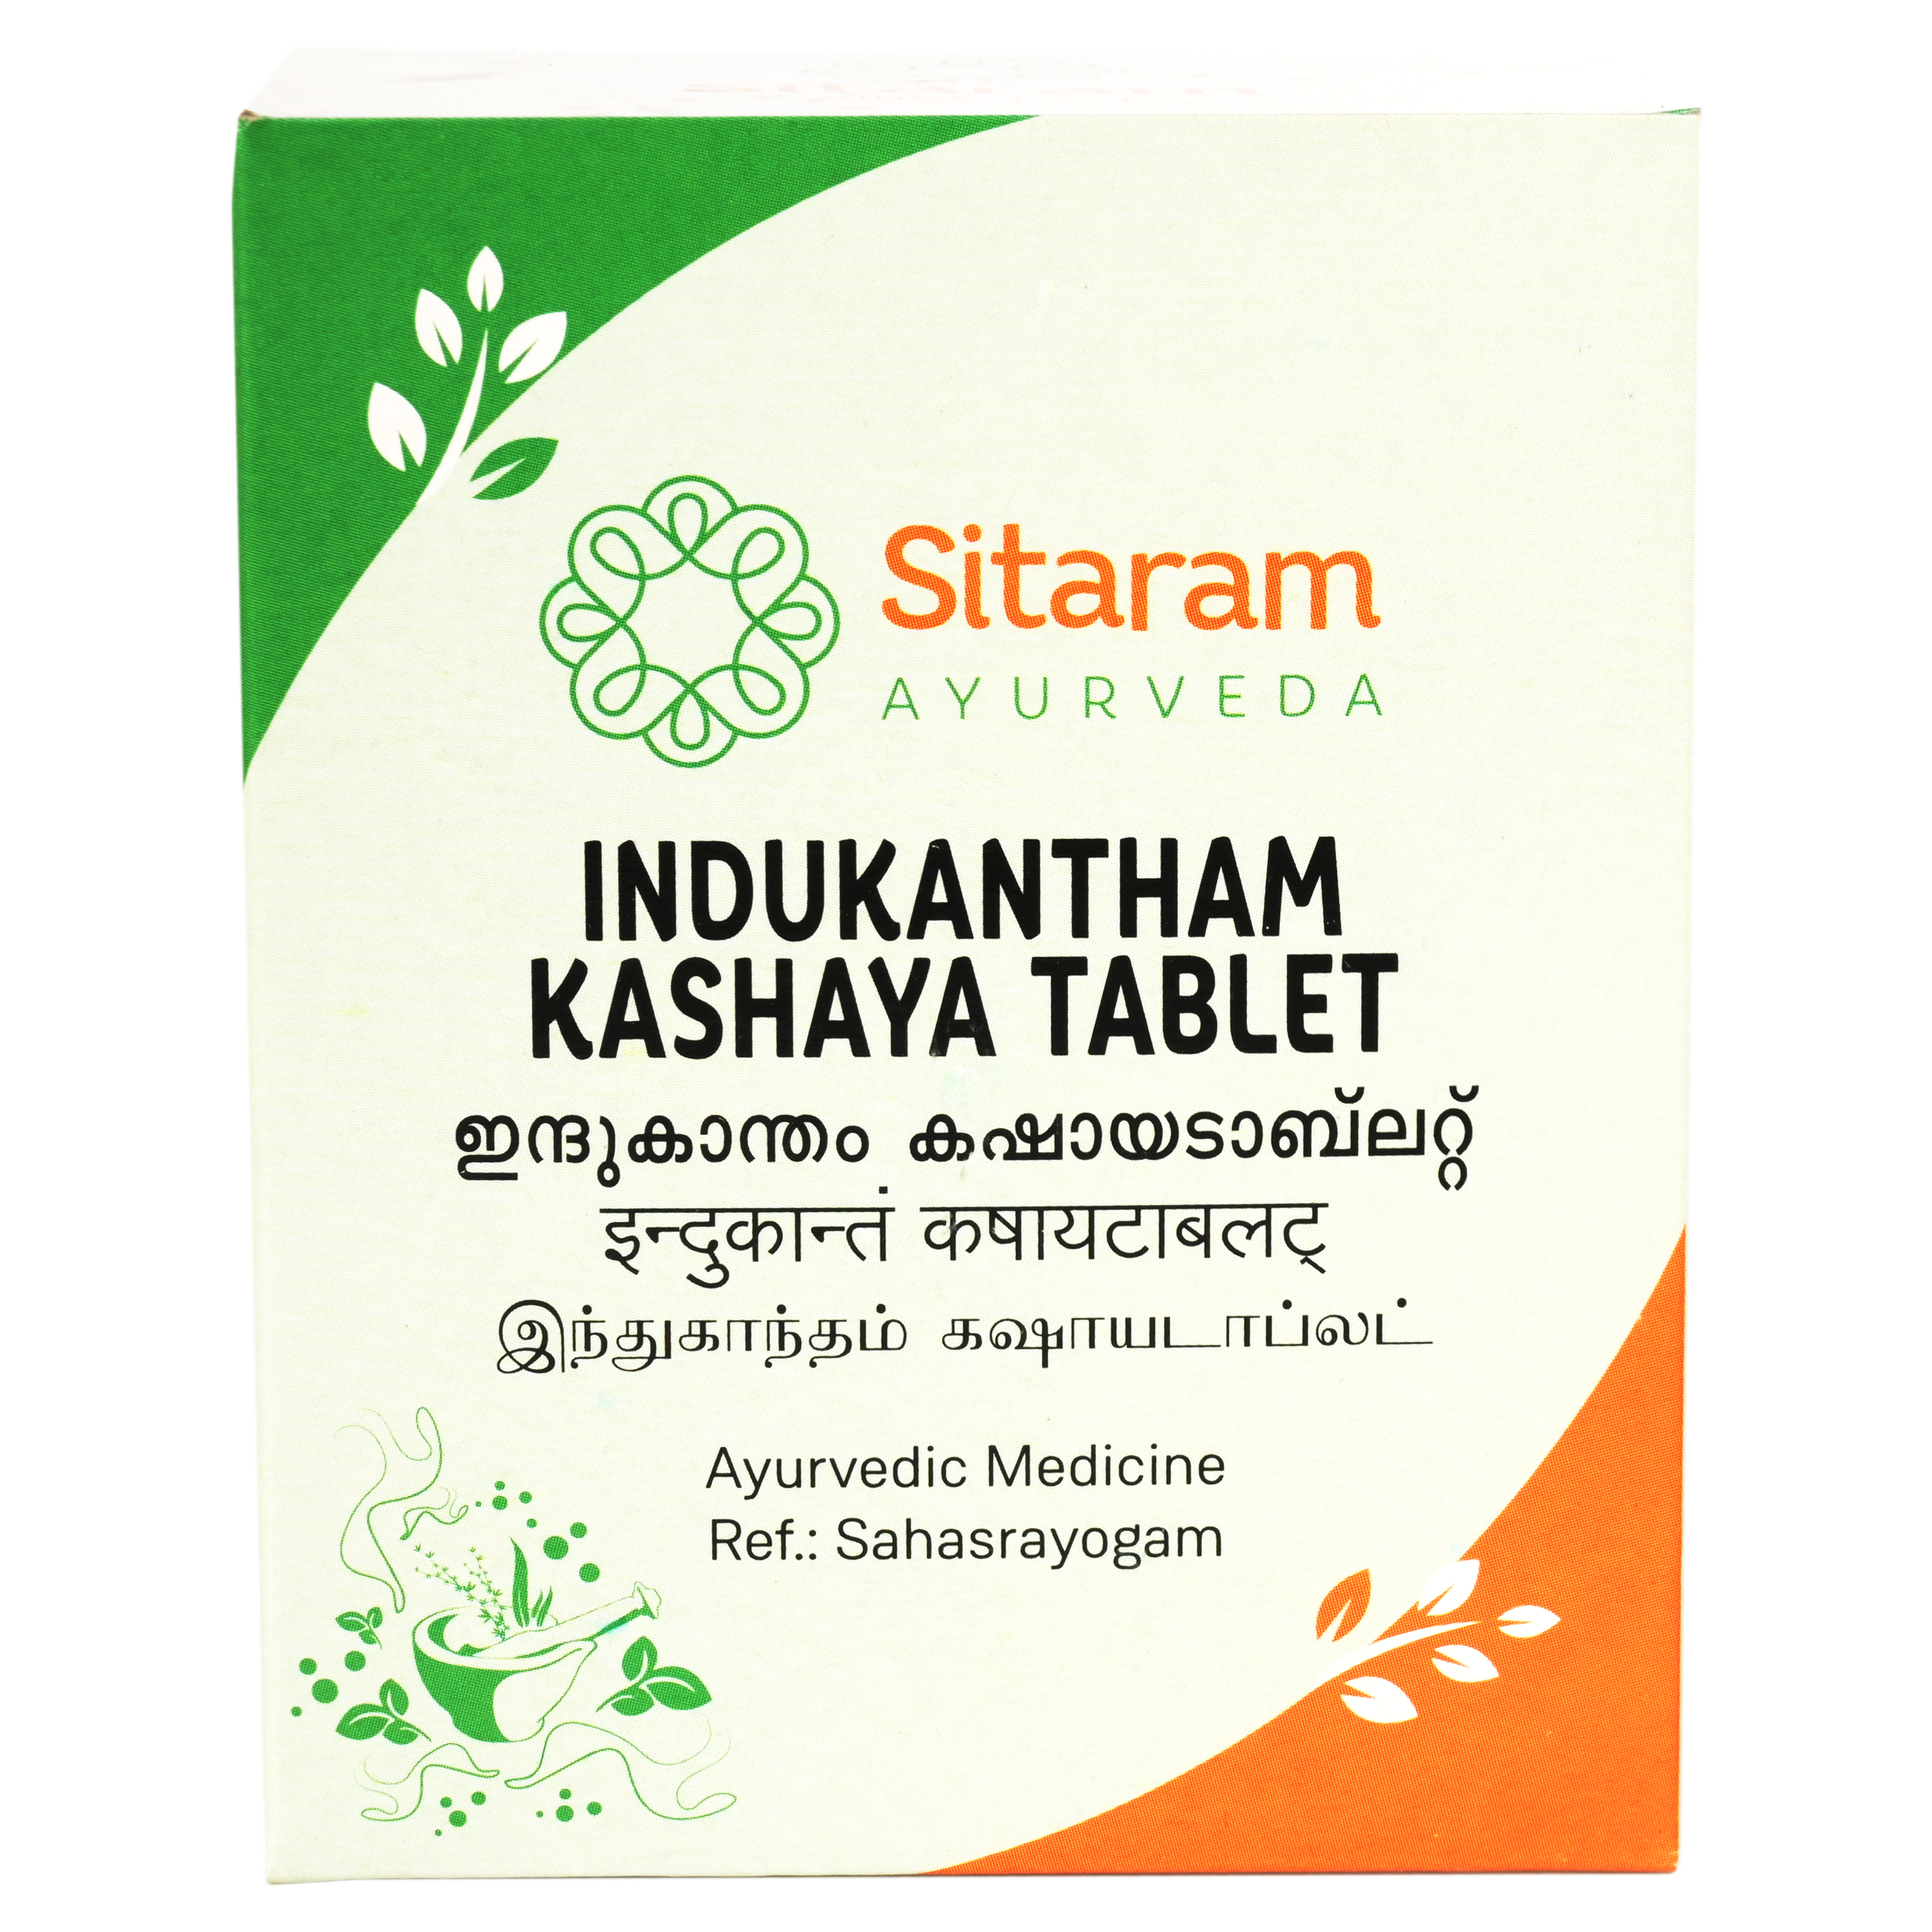 Sitaram Ayurveda Indukantham Kashaya Tablet 50Nos (Prescription Medication)